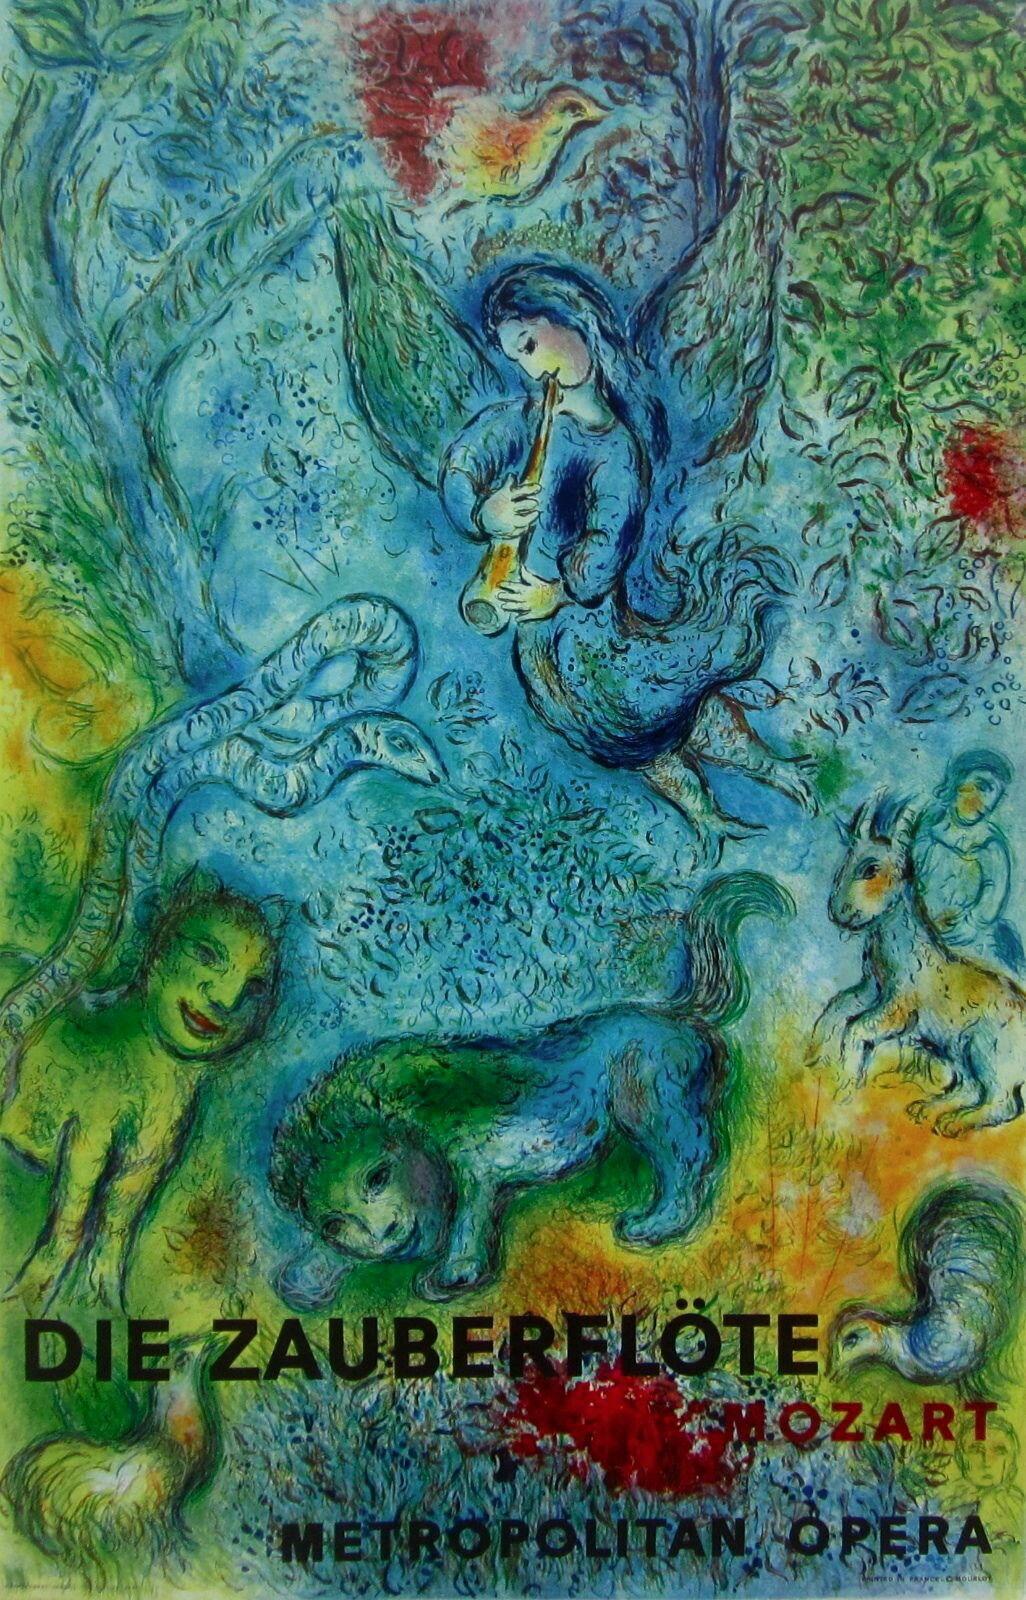 (after) Marc Chagall Figurative Print - The Magic Flute Die Zauberflote, 1973 Metropolitan Opera Exhibition Poster